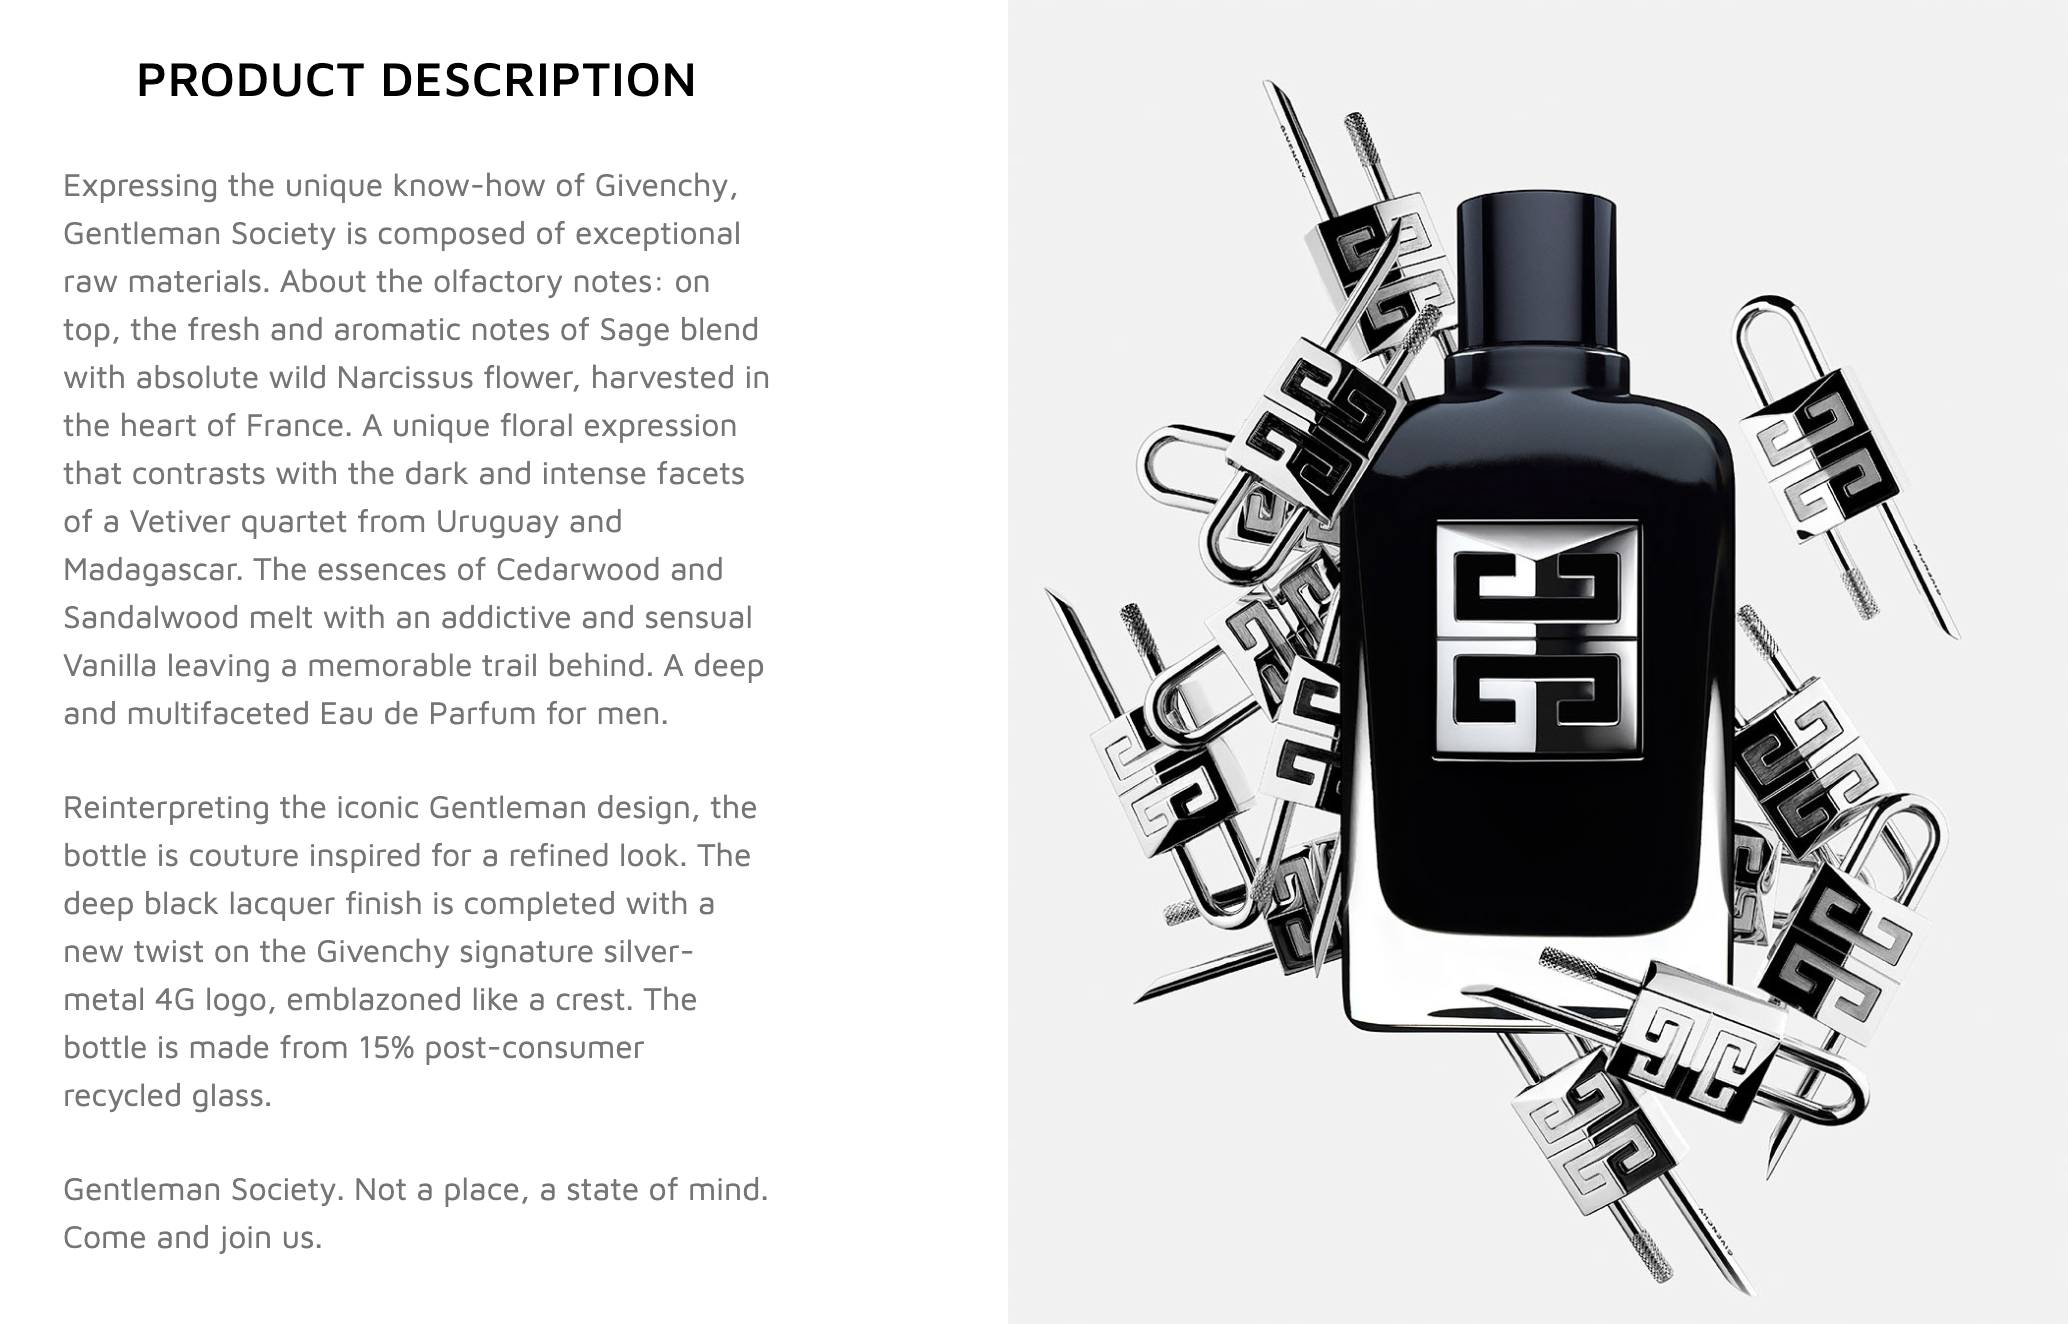 Givenchy Gentleman Society Eau de Parfum for Men Description
